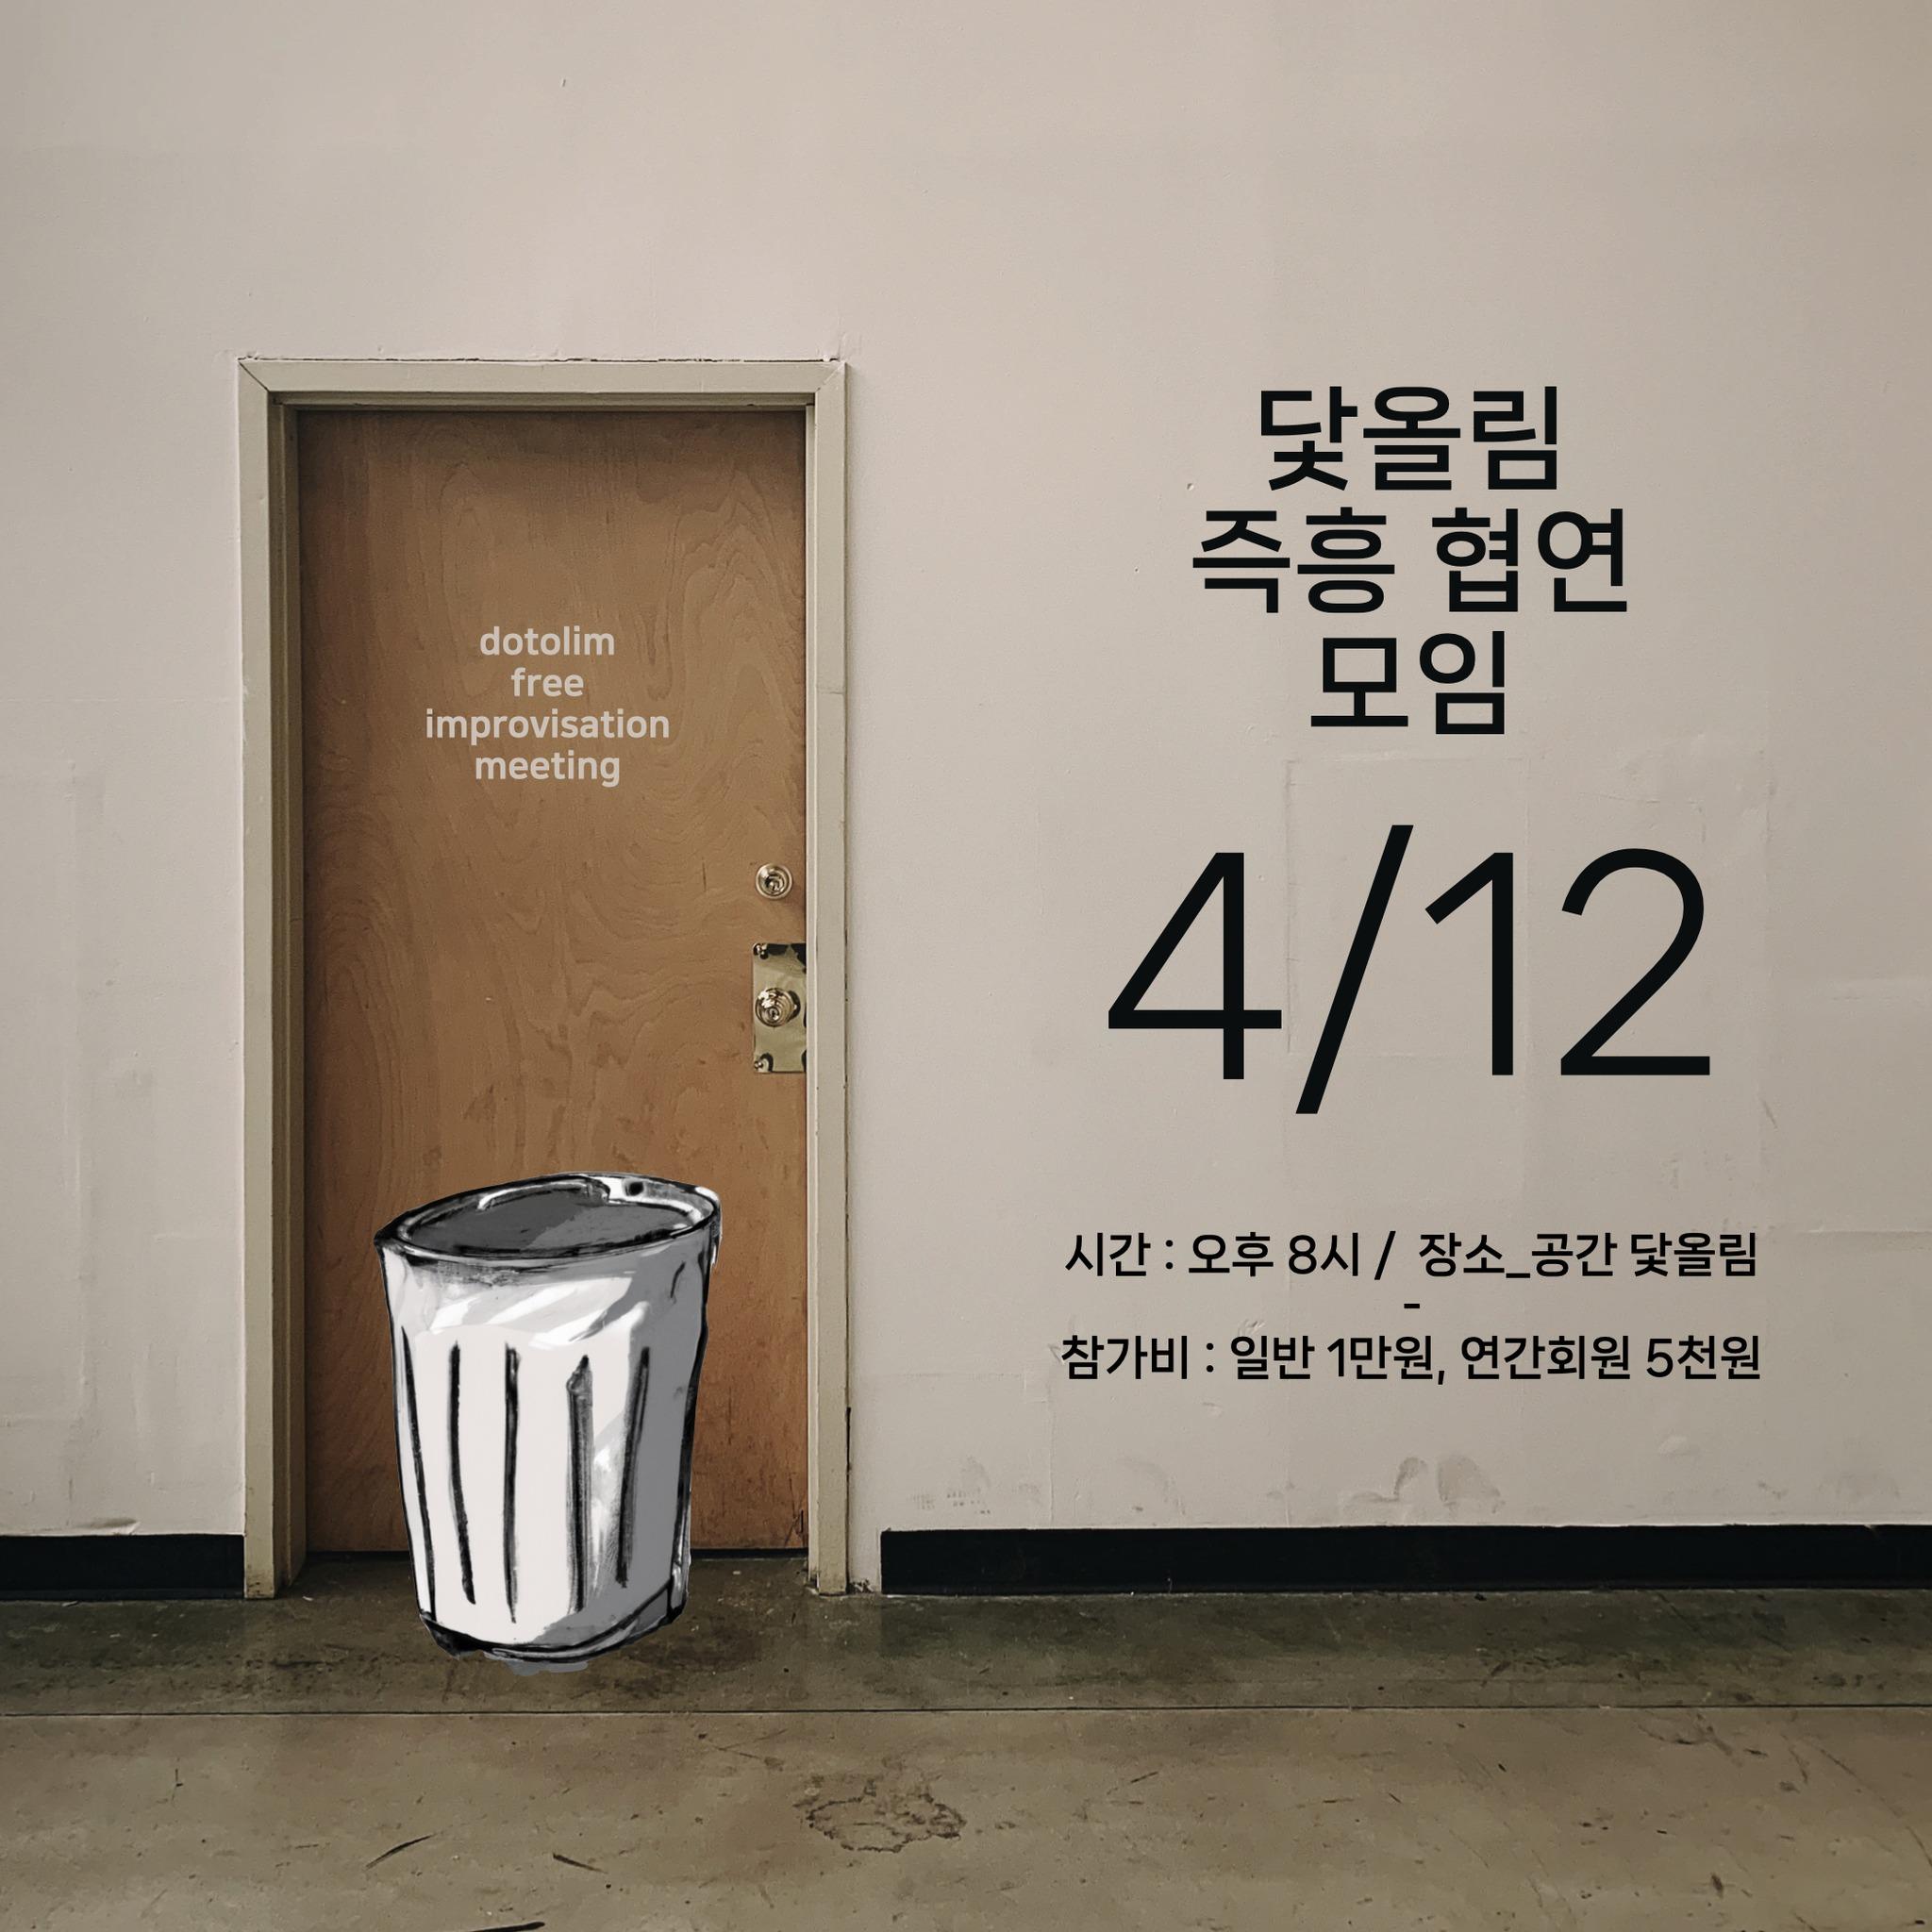 Part 1: poster for Dotolim Improvisation Meeting 닻올림 즉흥 모임